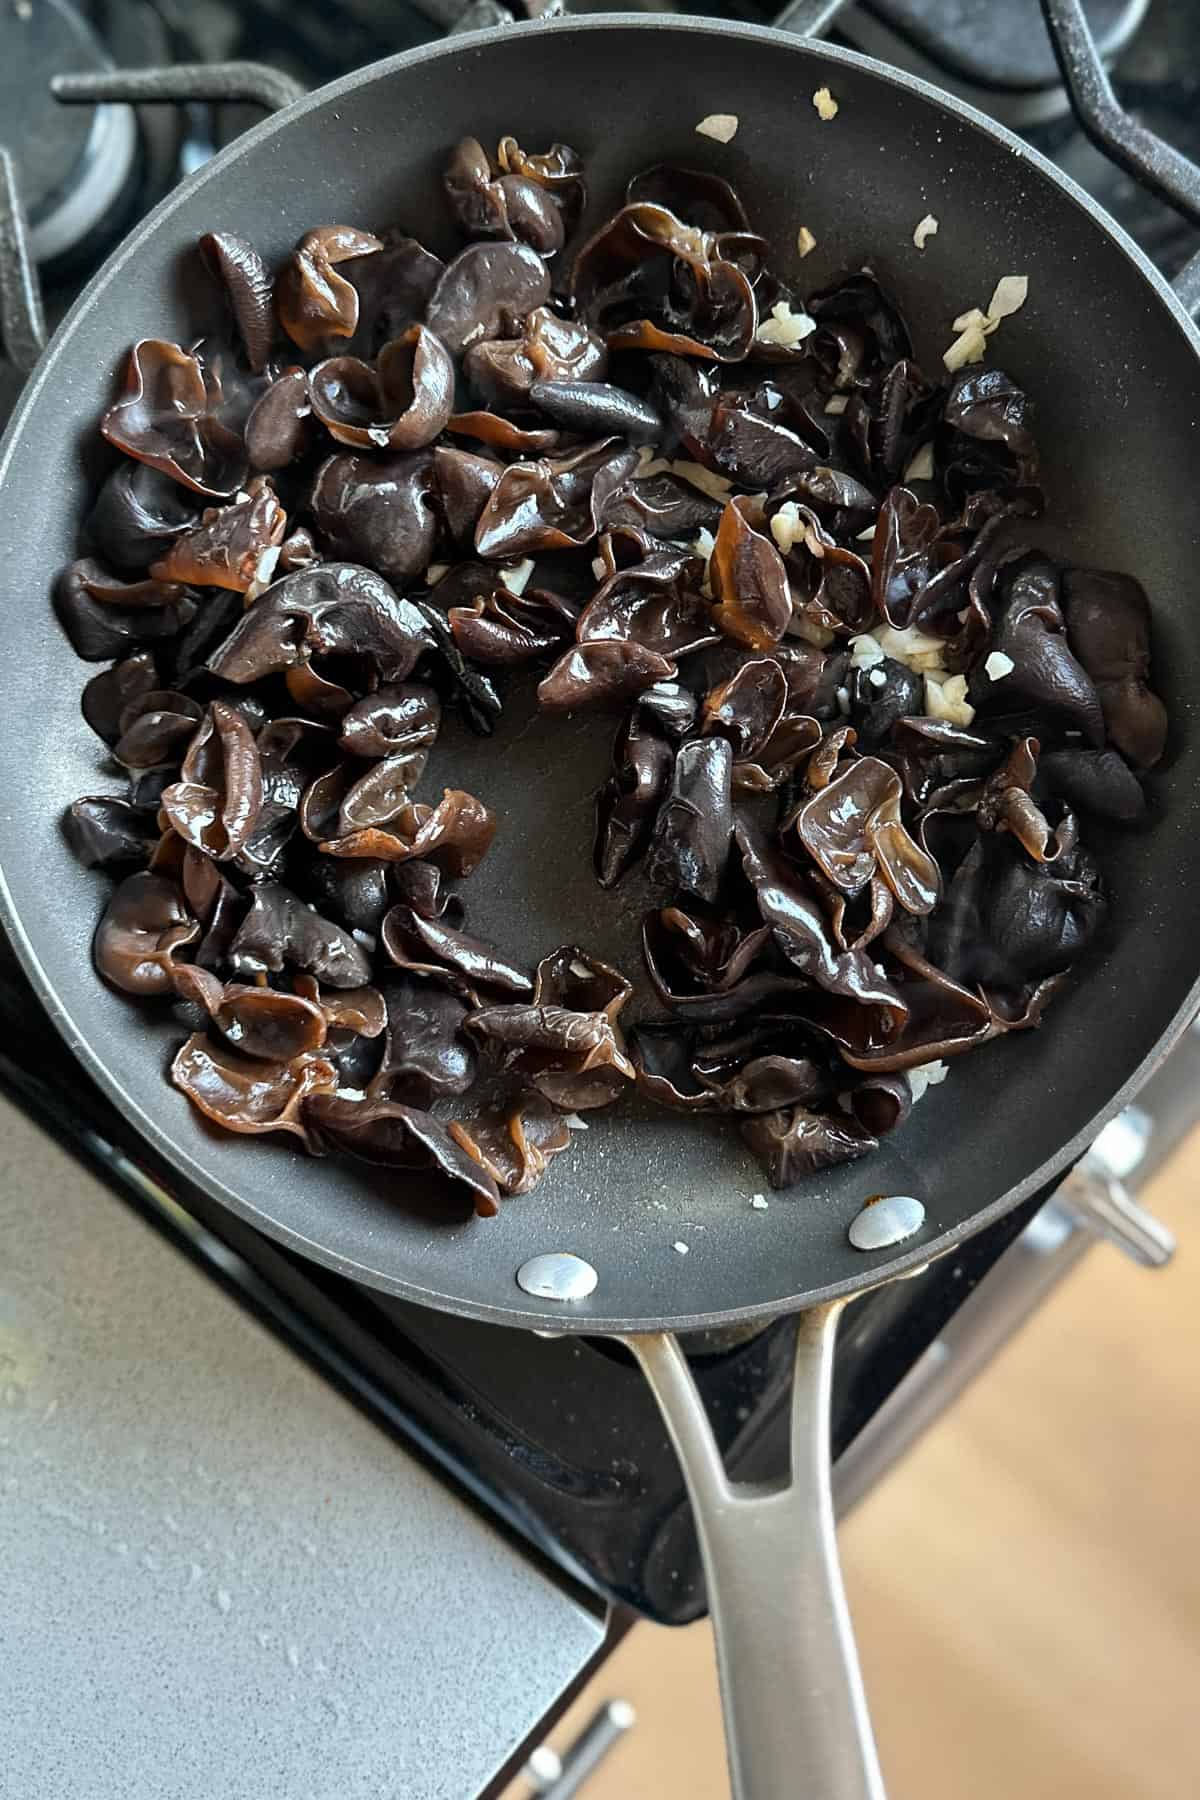 Adding wood ear mushrooms to the garlic in a pan.